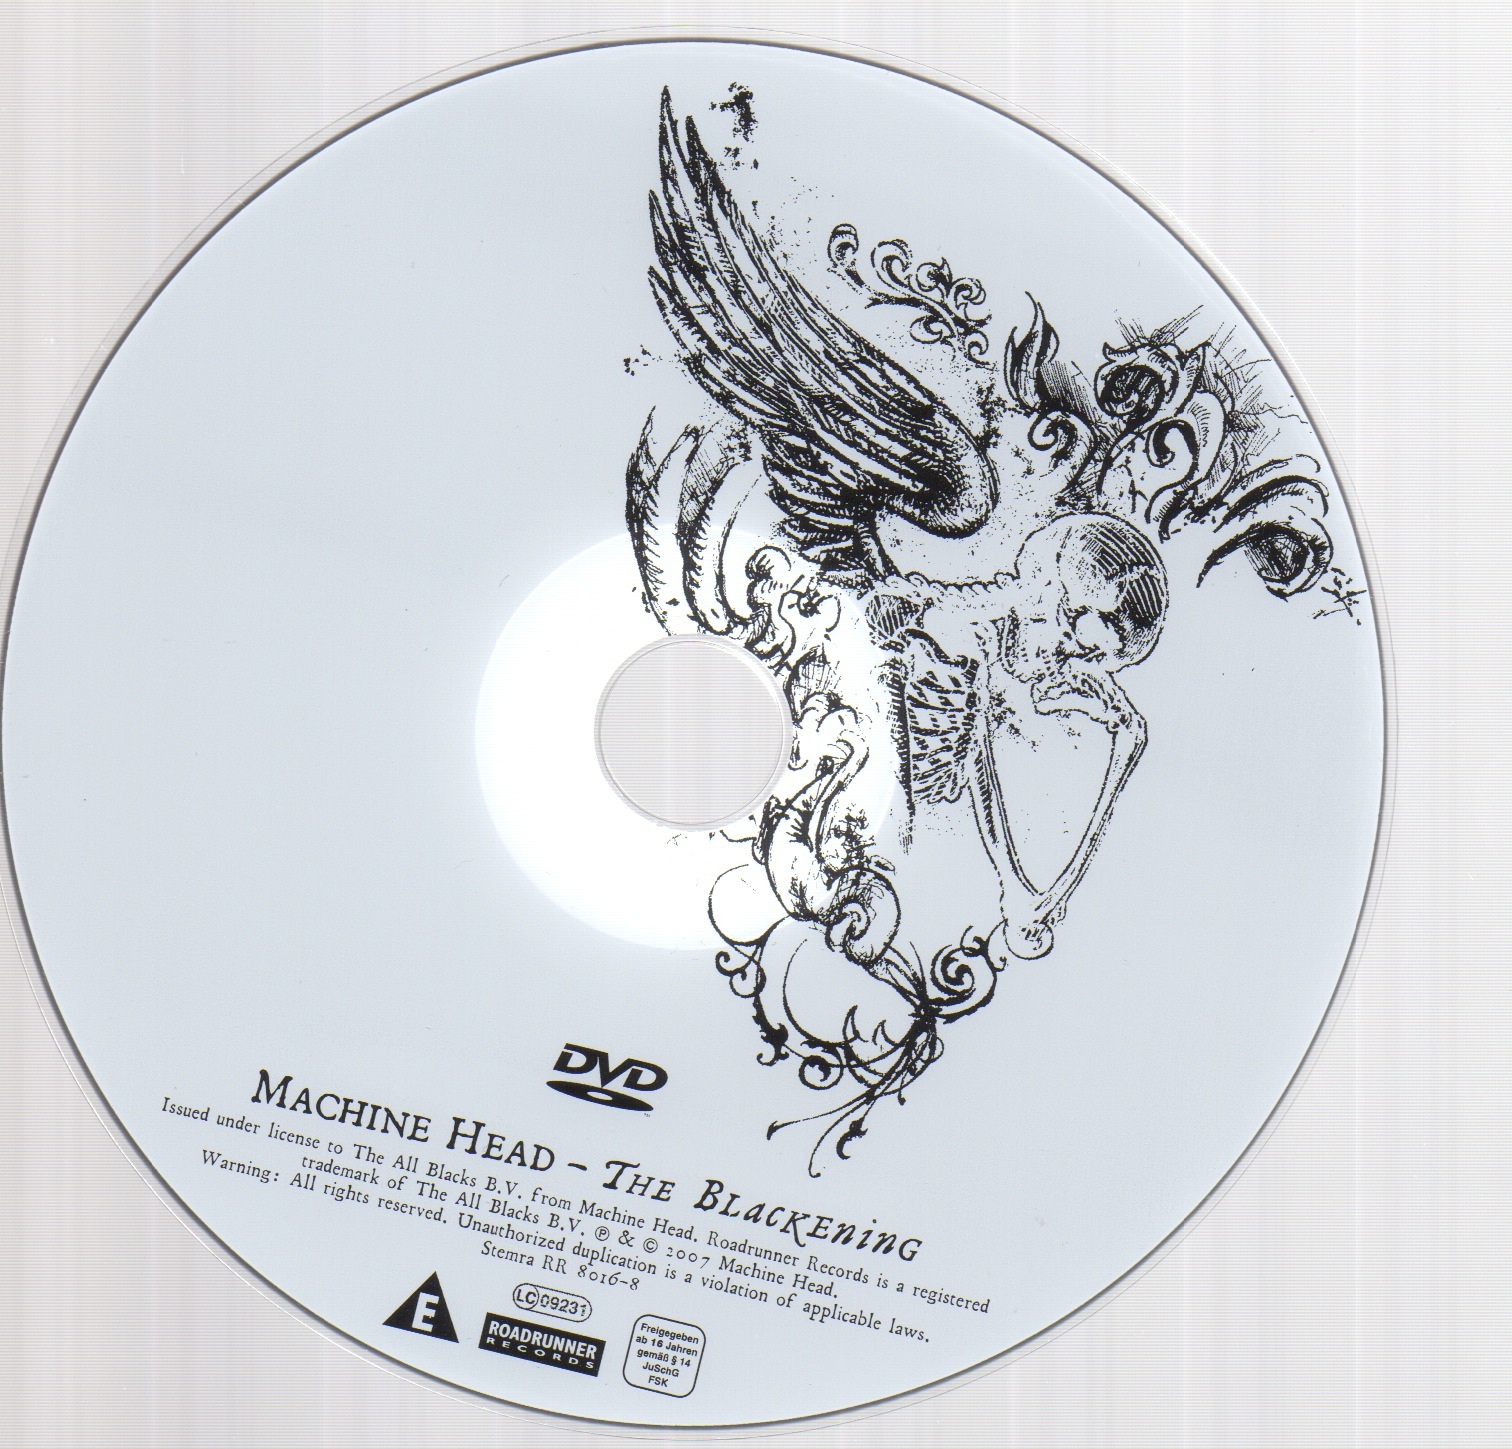 The Blackening CDDVD DVD